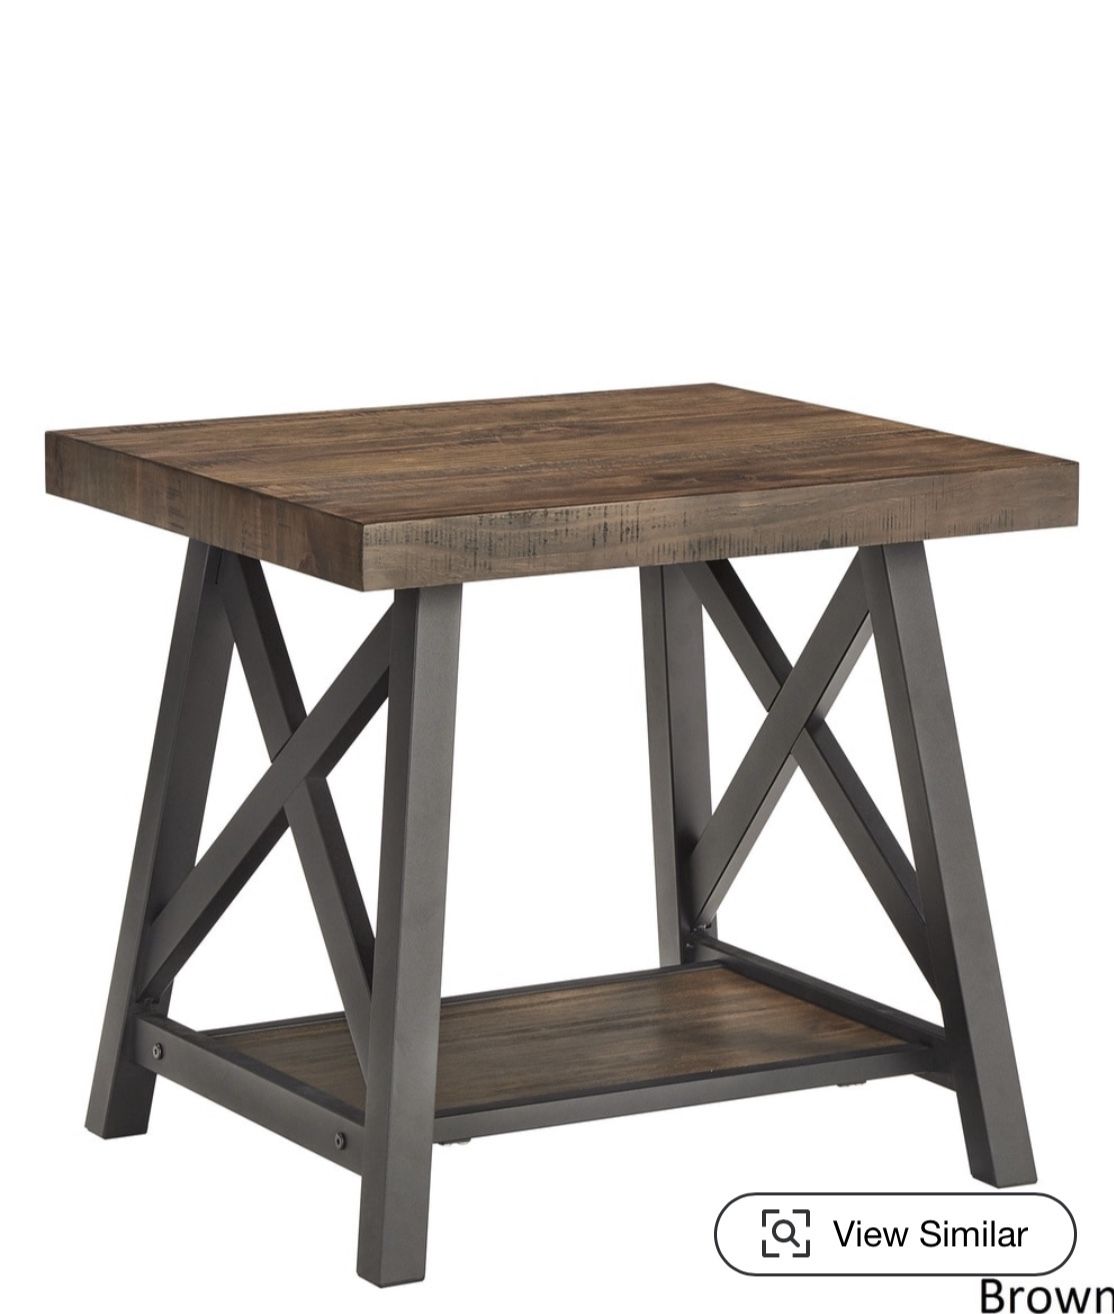 Oak wood finish side table